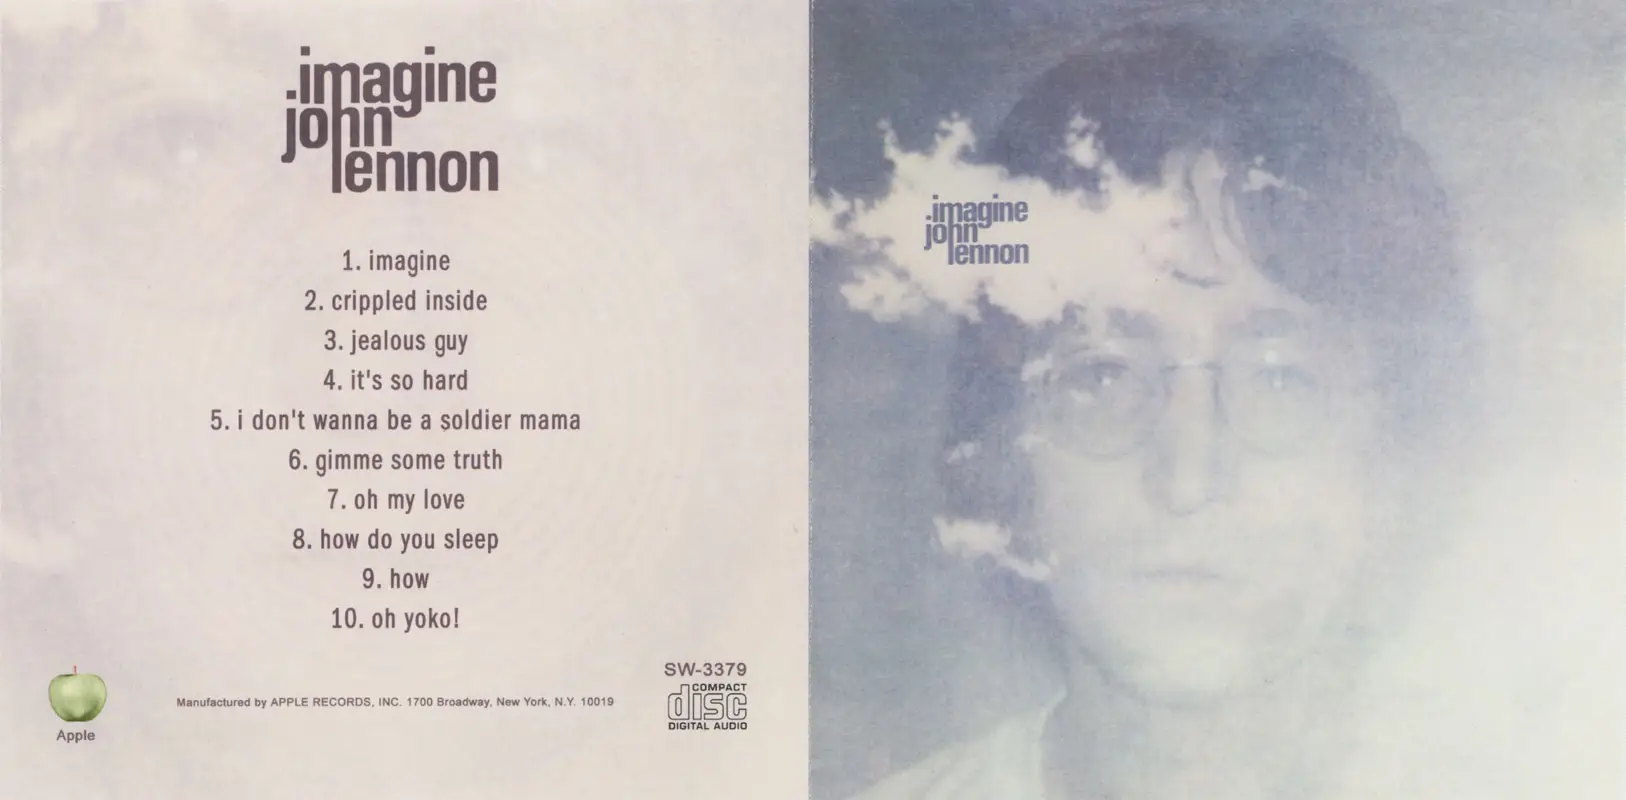 Imagine песня джона леннона. Джон Леннон 1971. Джон Леннон 1971 imagine. John Lennon imagine обложка. John Lennon - imagine (1971)(Balkanton, 1989).